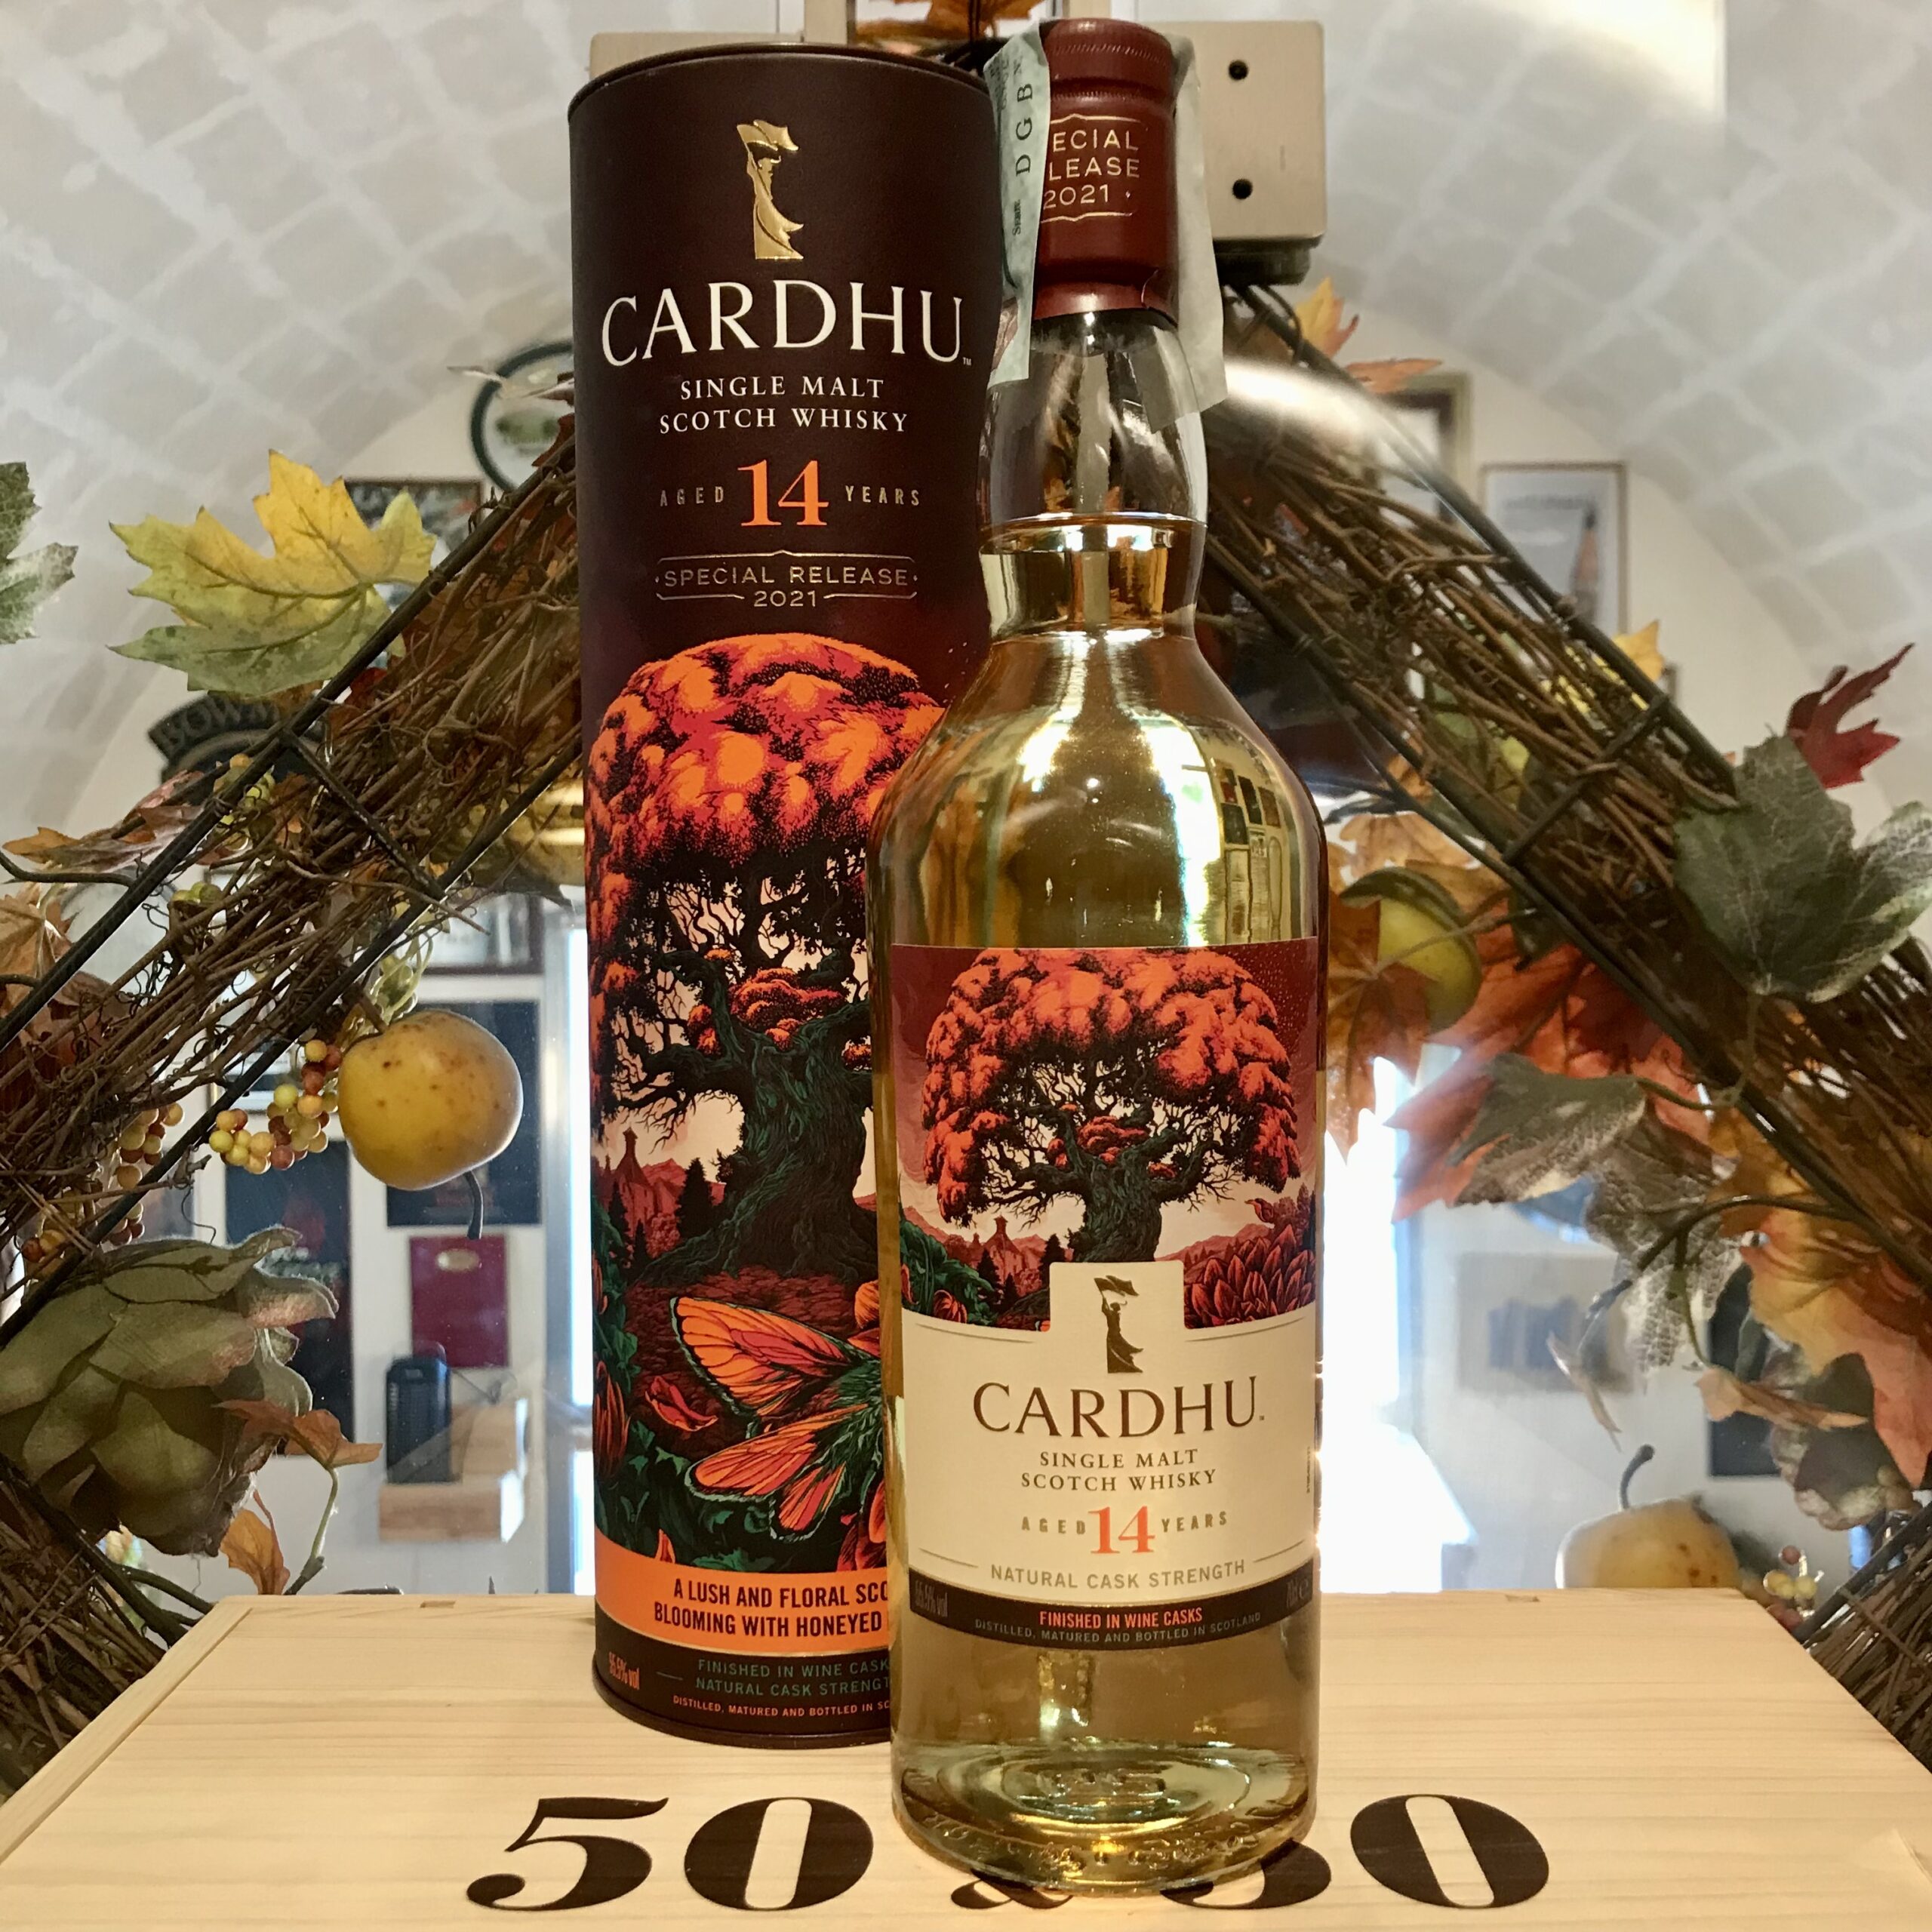 Cardhu Single Malt Scotch Whisky 14 YO Special Release 2021